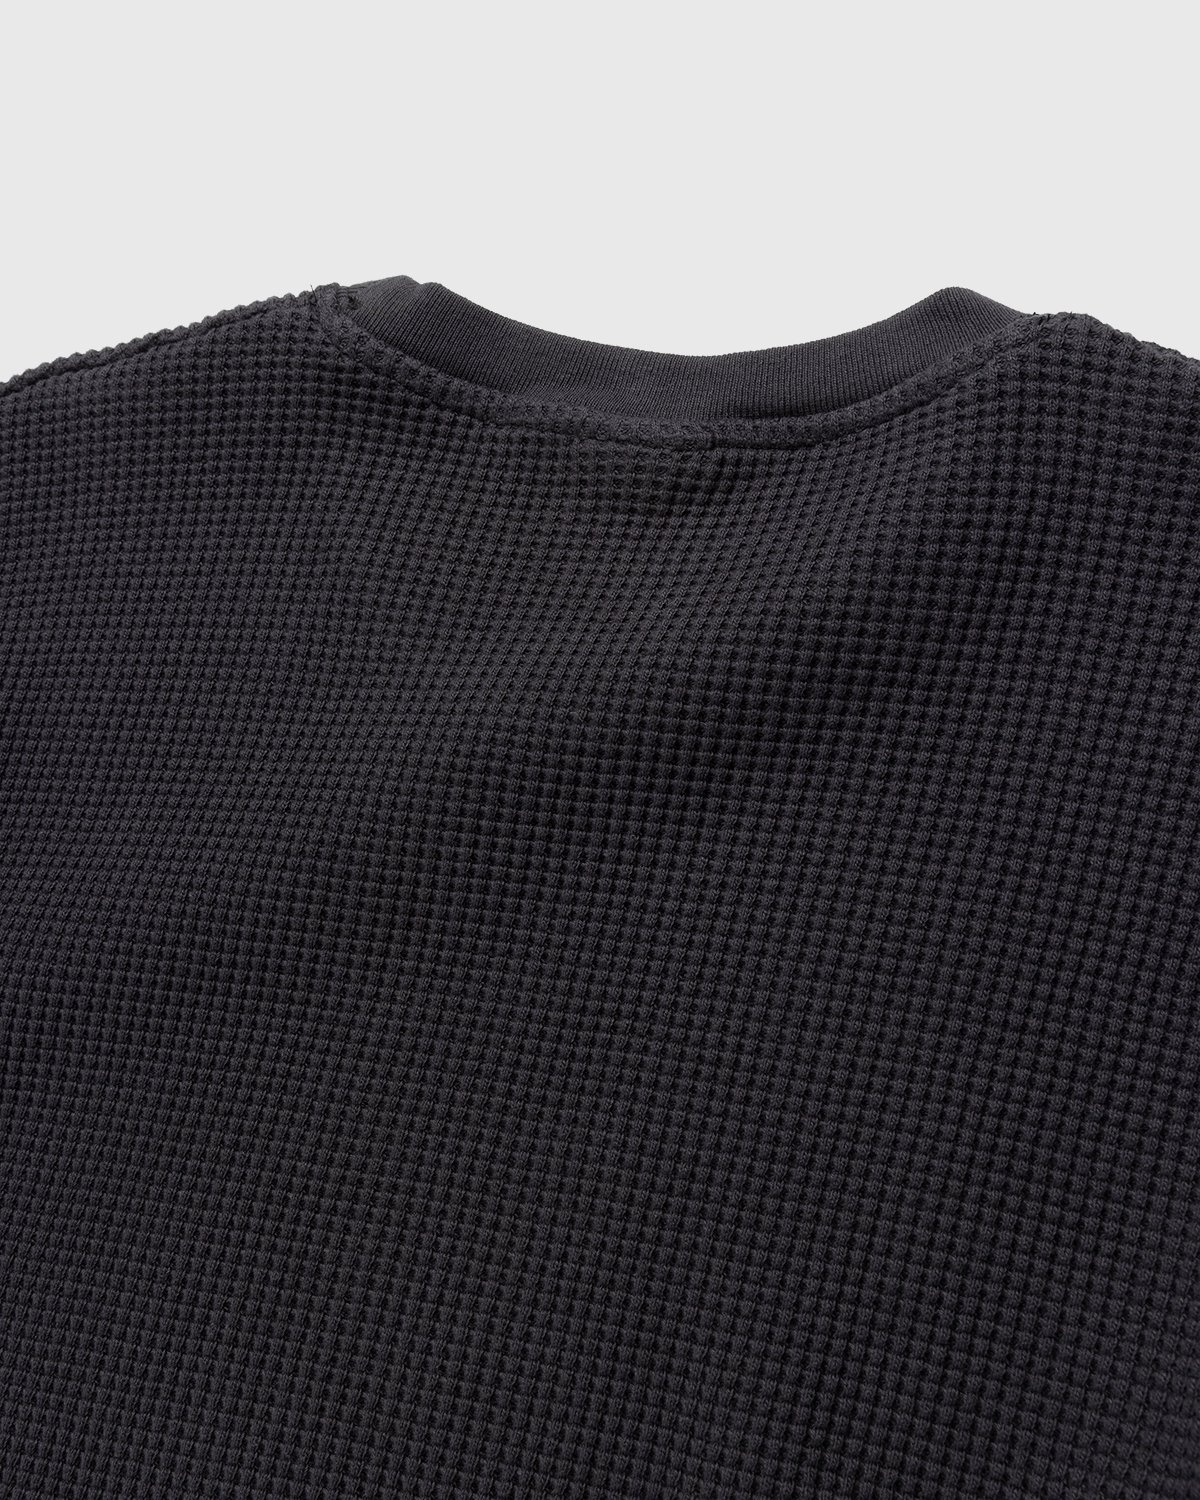 Highsnobiety – Thermal Staples Long Sleeve Black - Sweats - Black - Image 3